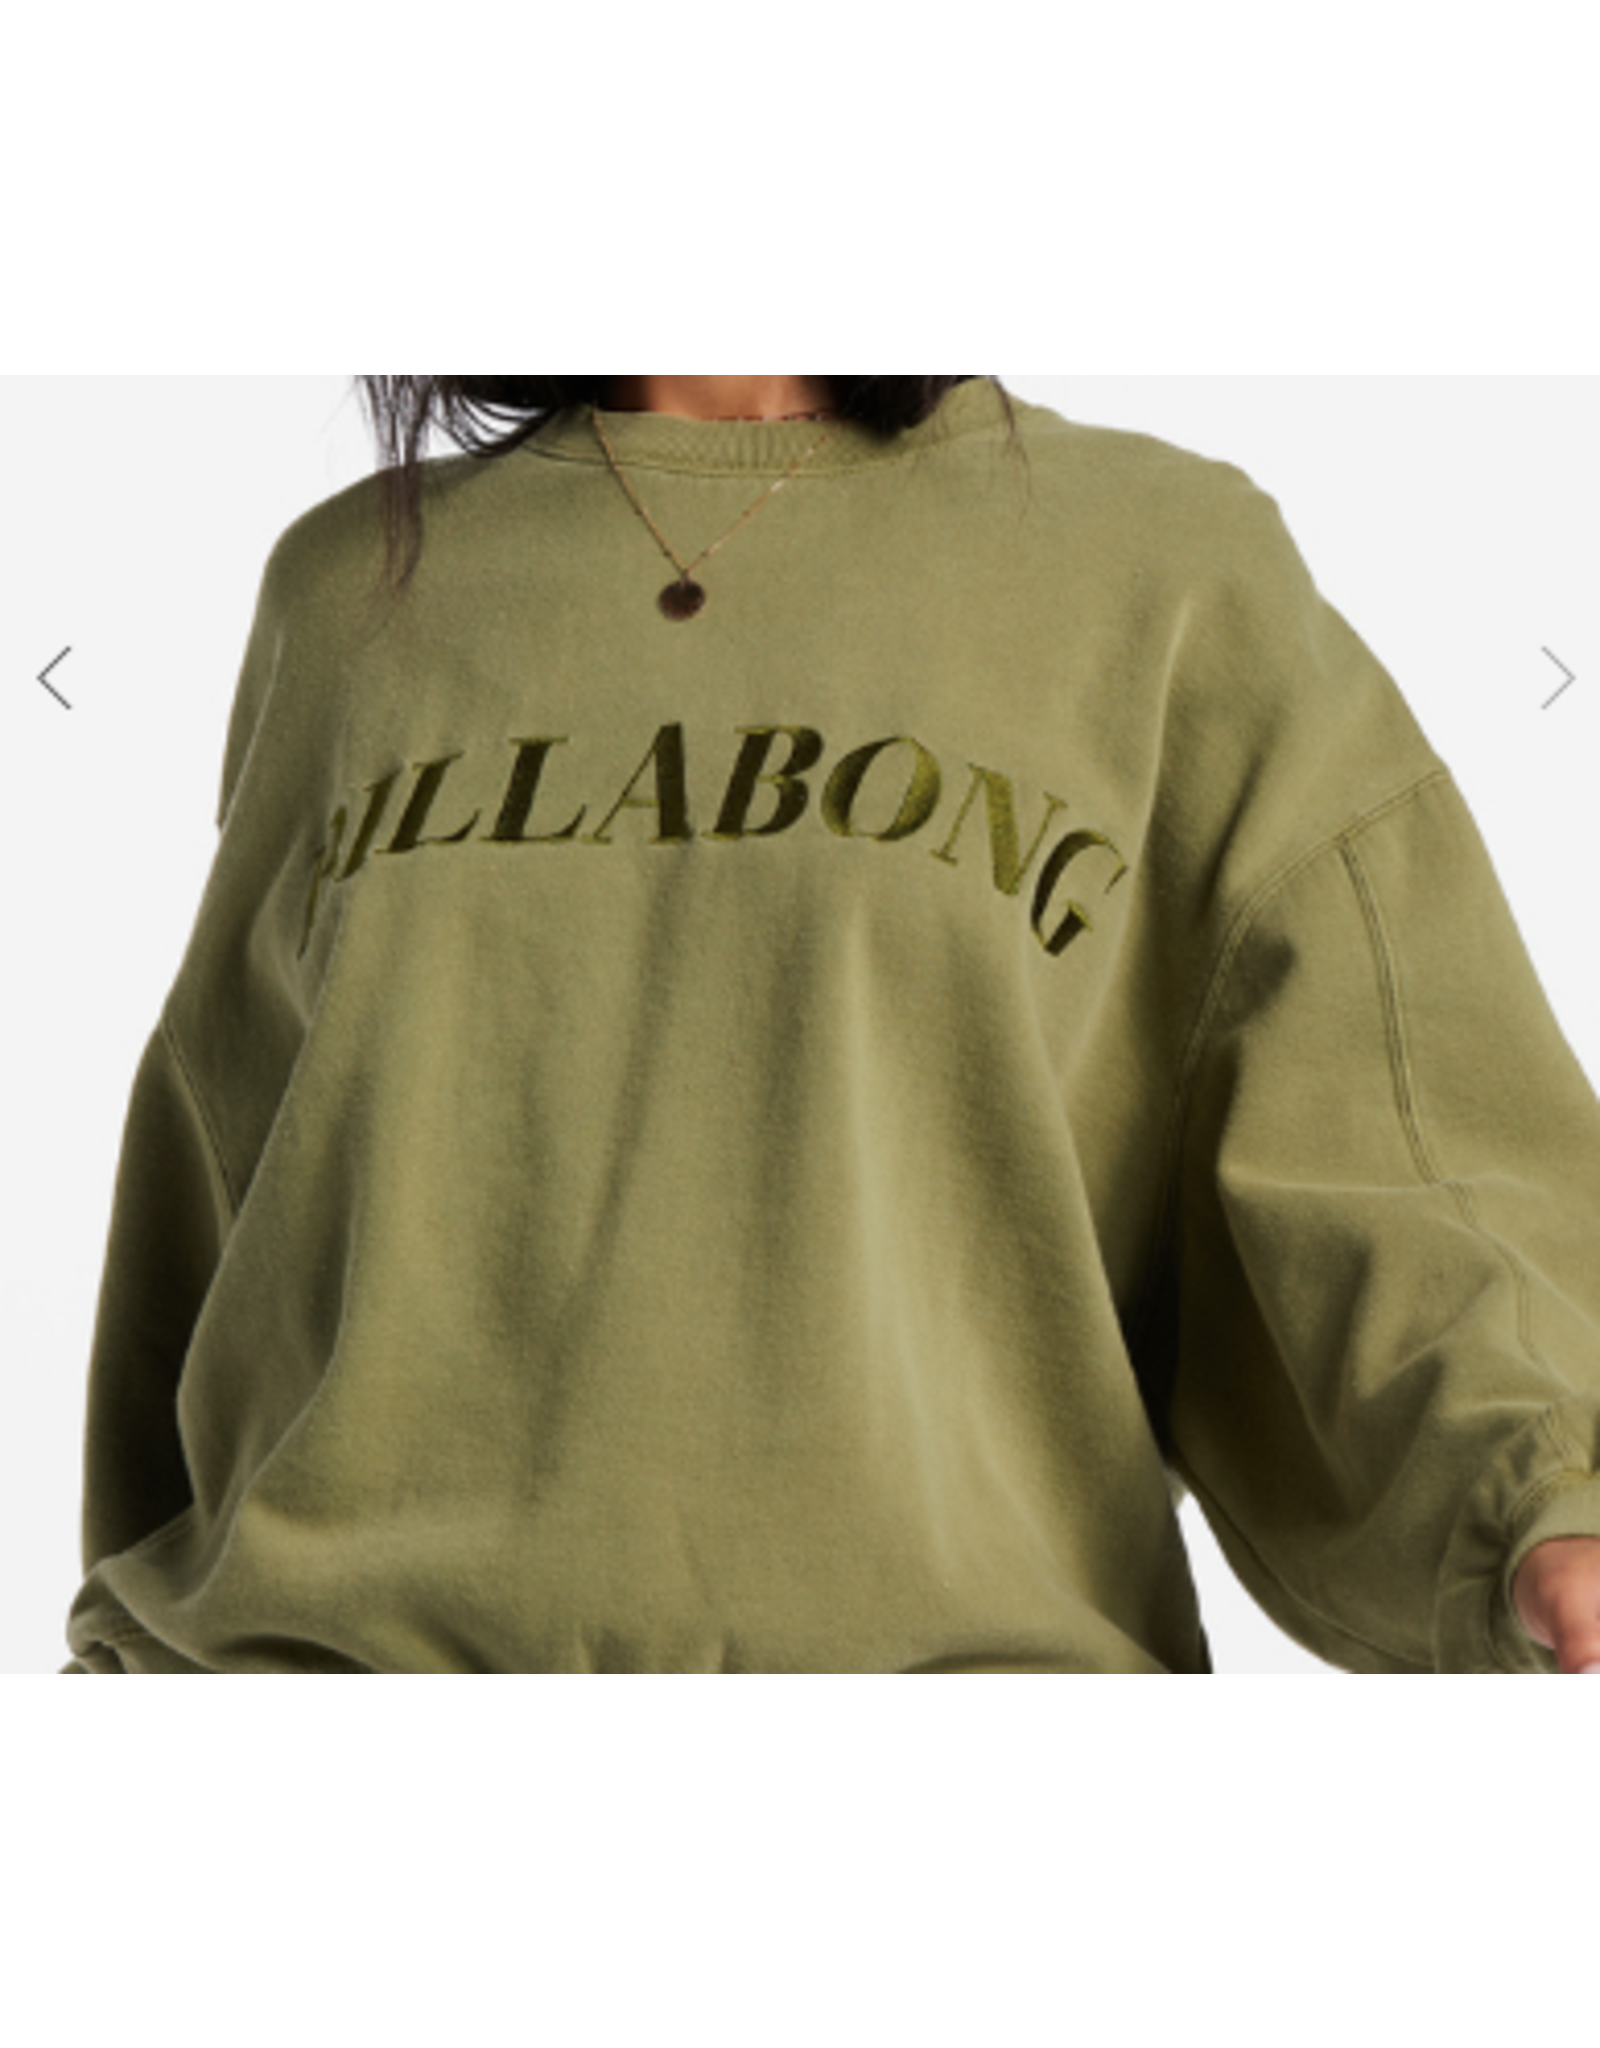 BILLABONG Baseline Kendall Sweatshirt - Size S